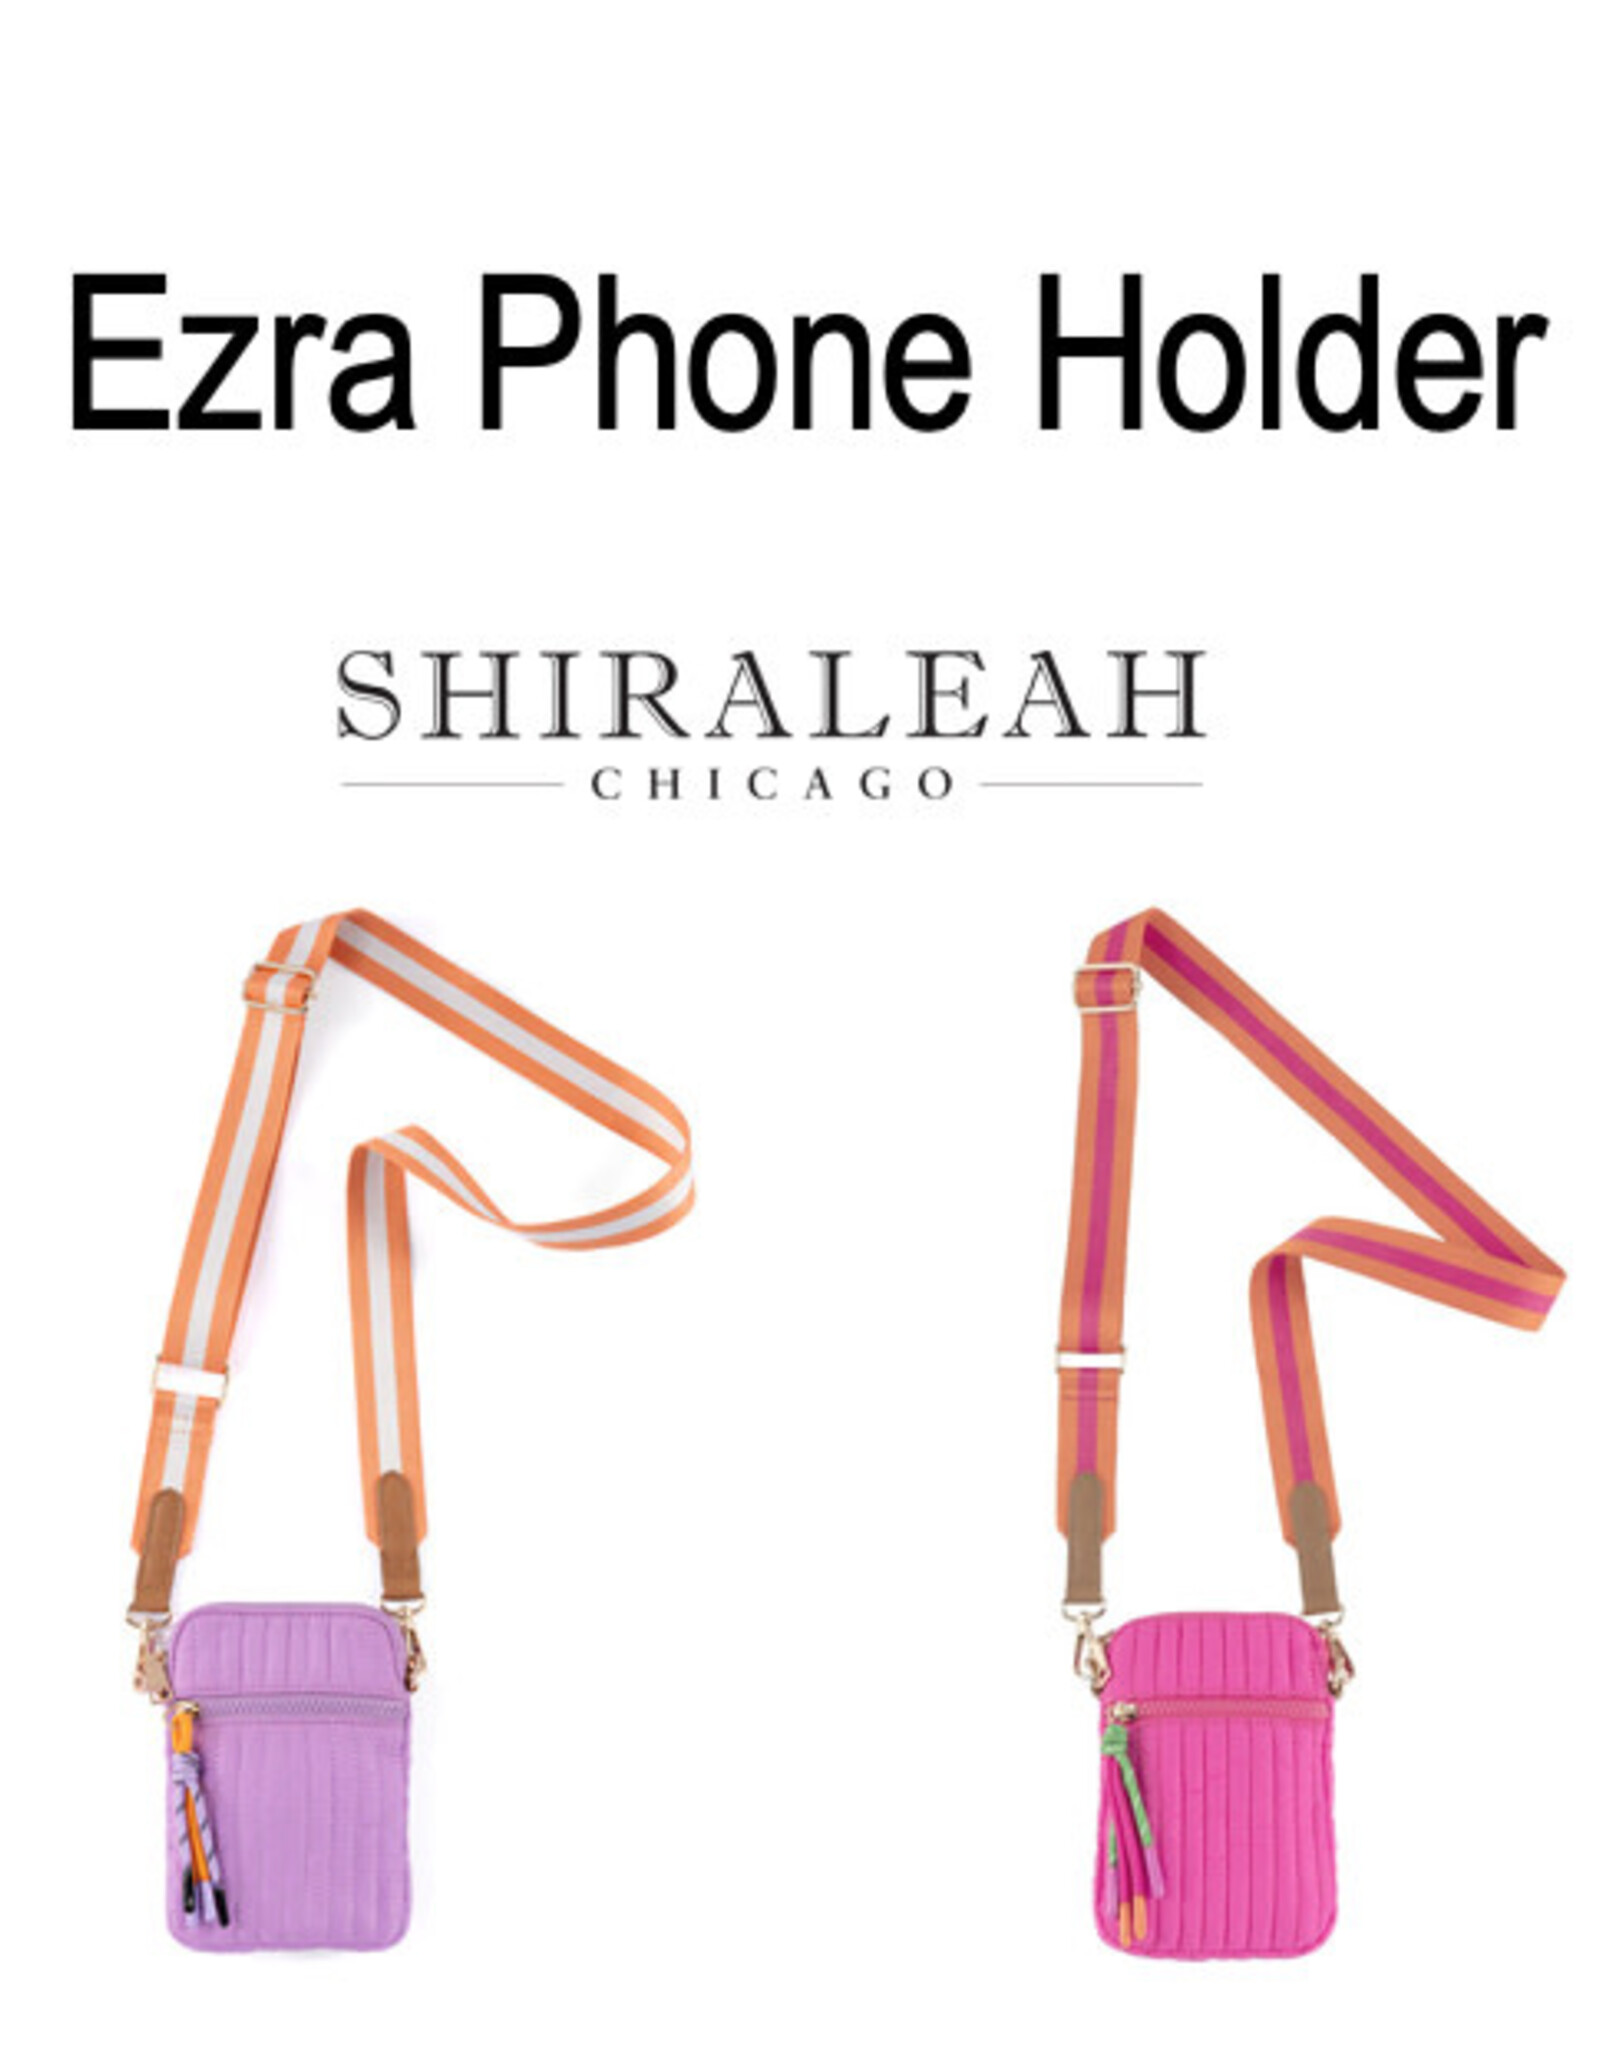 Ezra Phone Holder